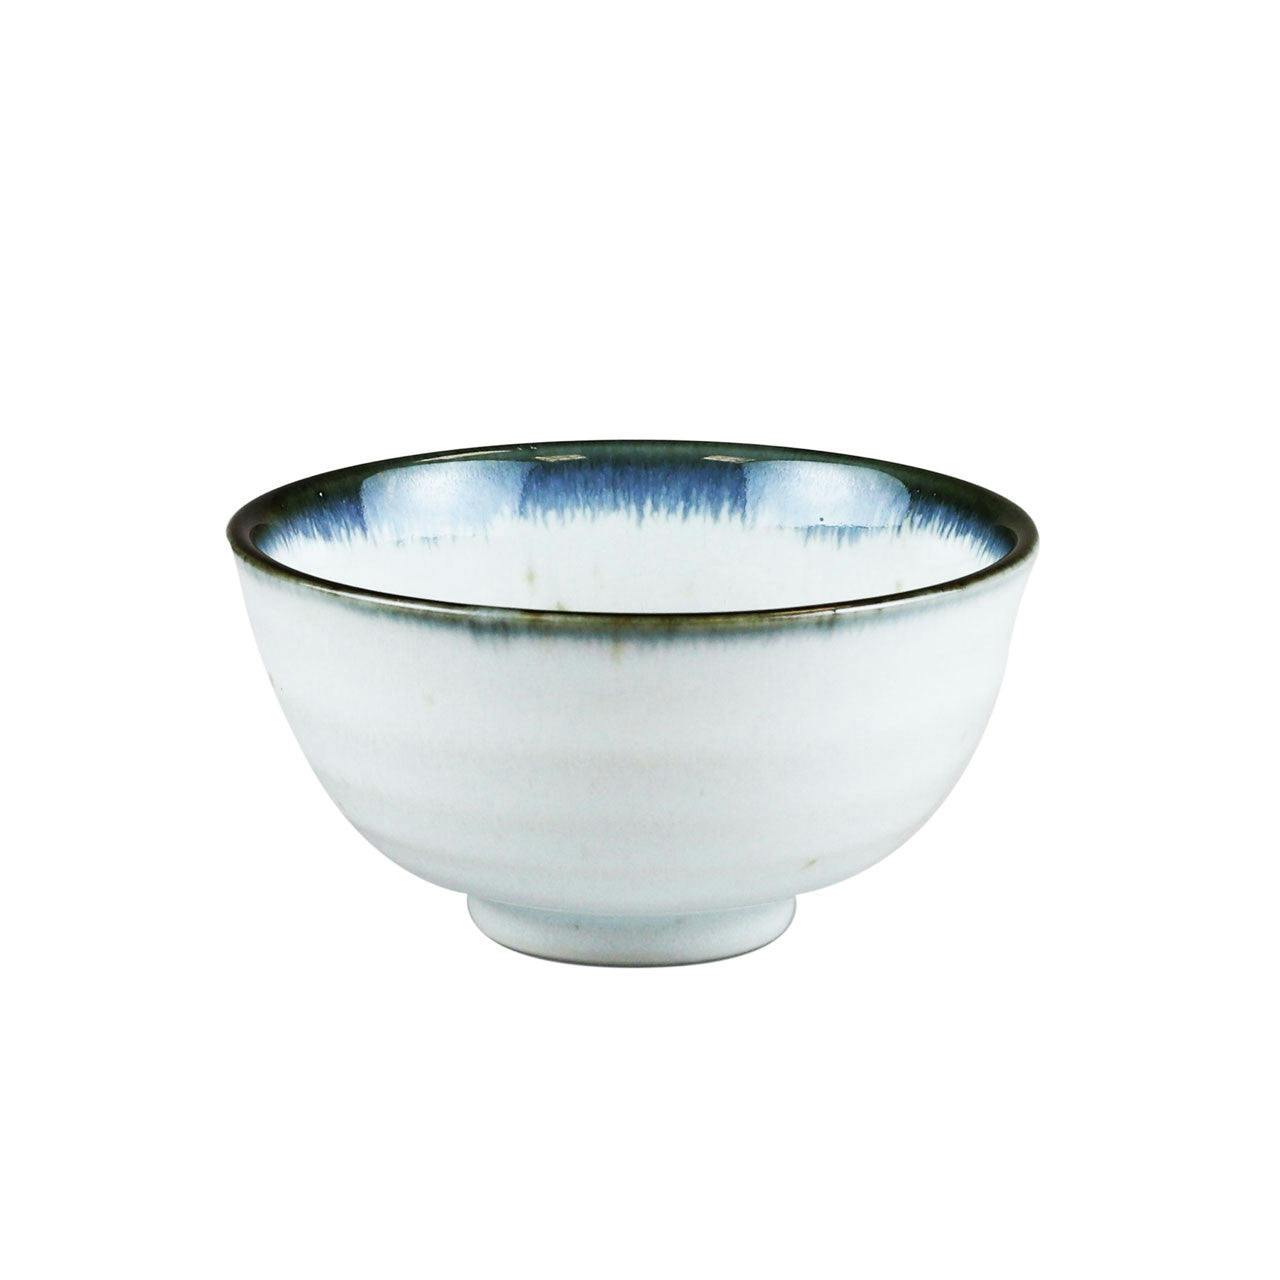 Shirokinyo Ivory Speckled Rice Bowl with Indigo Rim 象牙色 斑点 靛蓝边 饭碗 13.5 fl oz / 4.96" dia